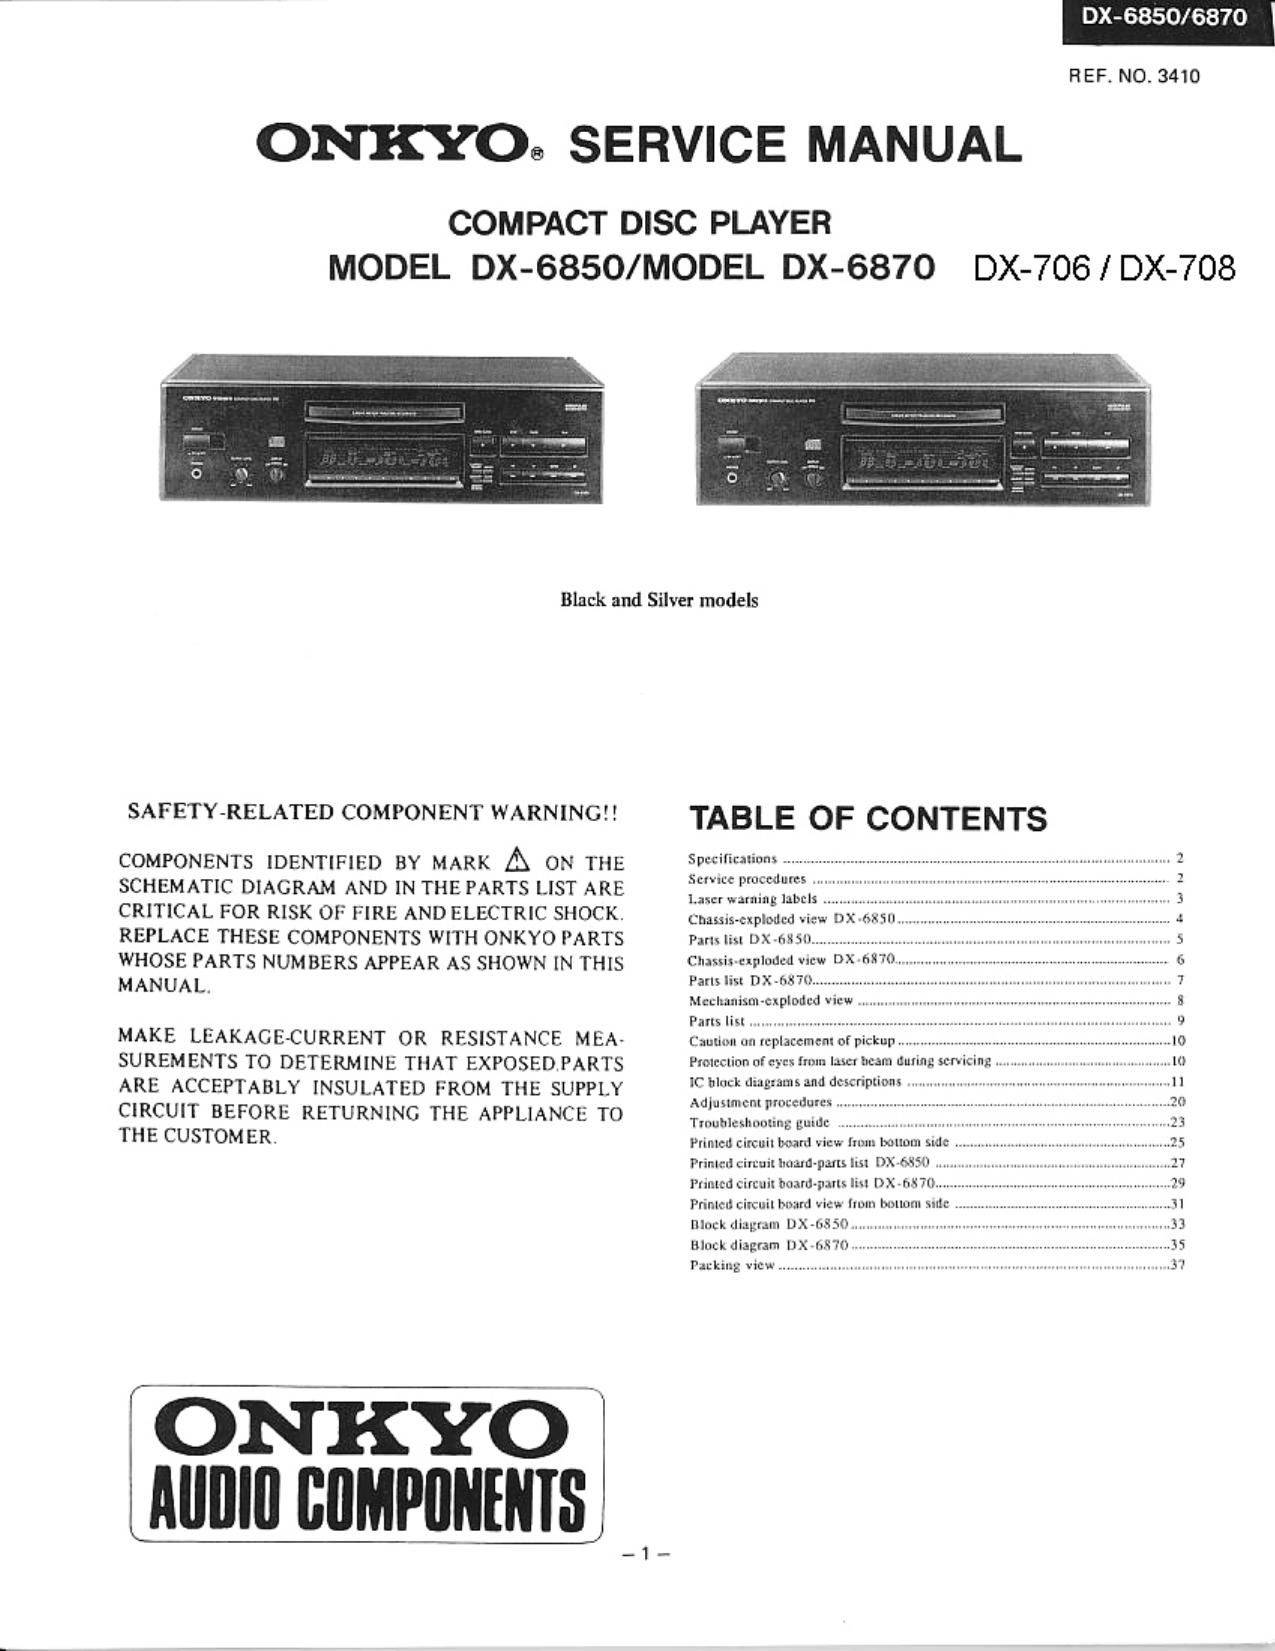 Onkyo DX-6870